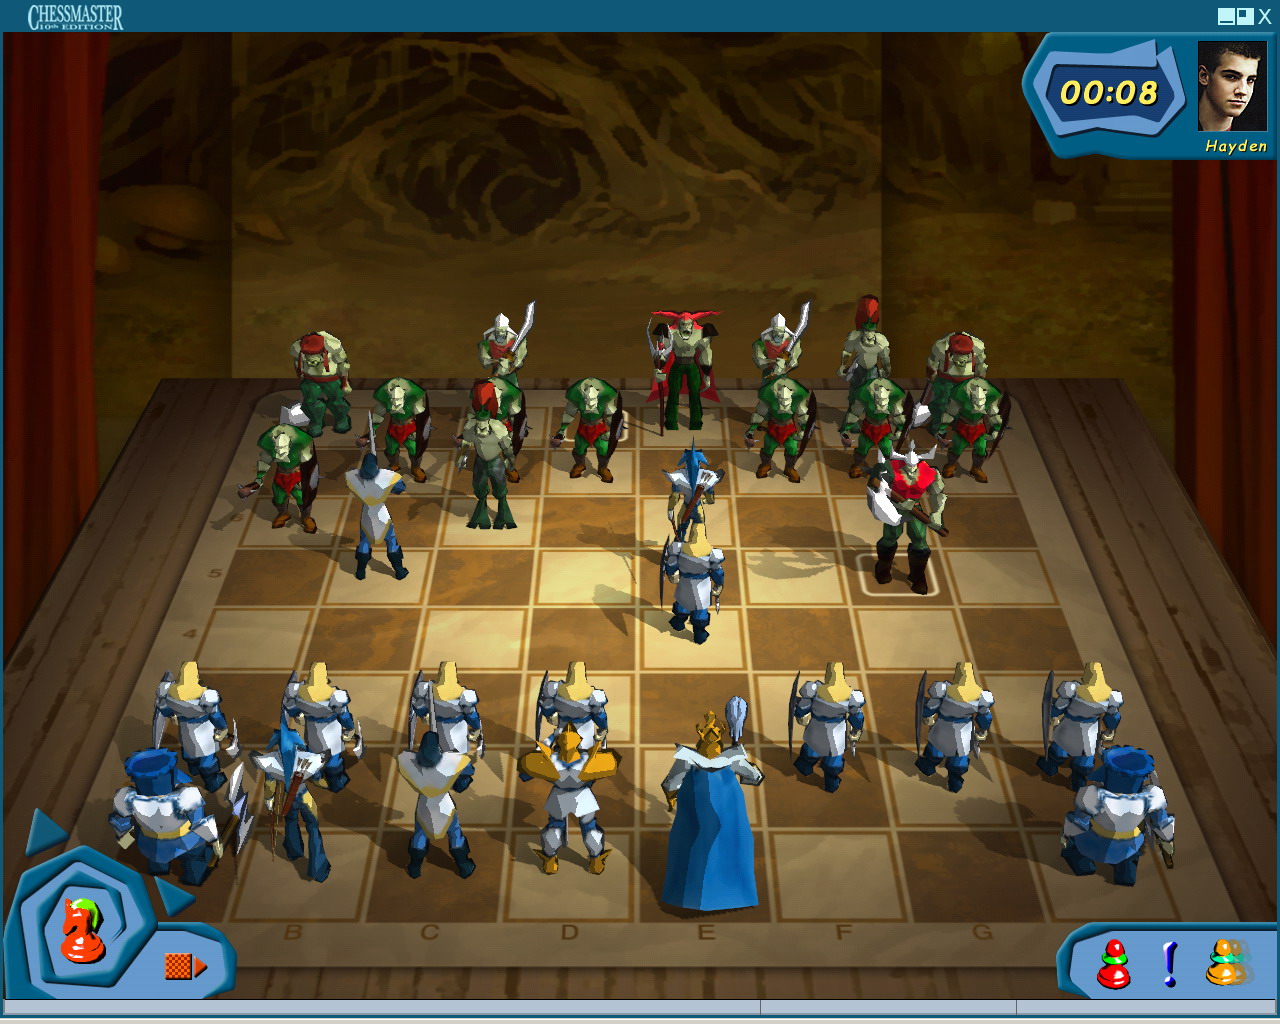 Download free chessmaster 10